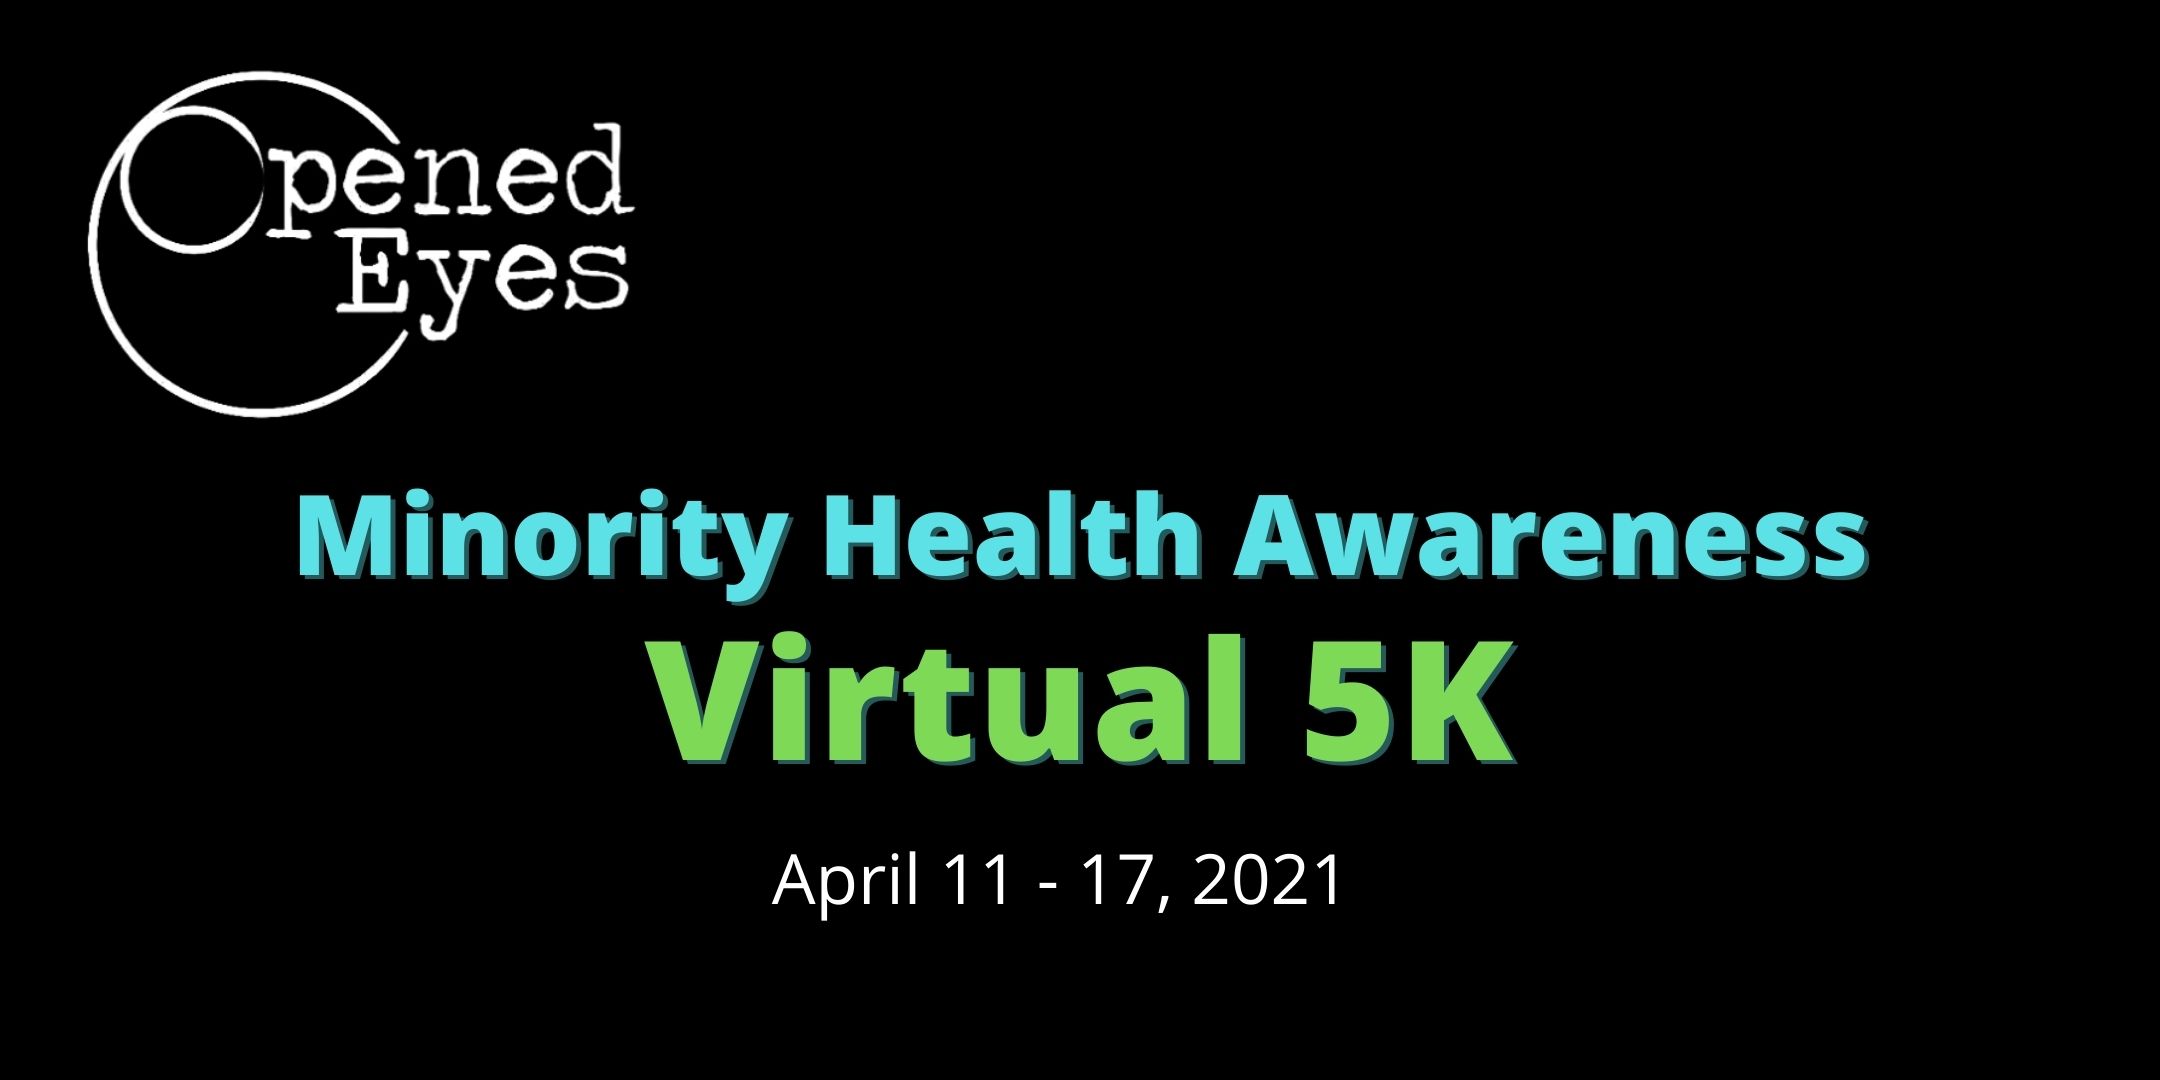 OpenedEyes Virtual 5K for Minority Health Awareness